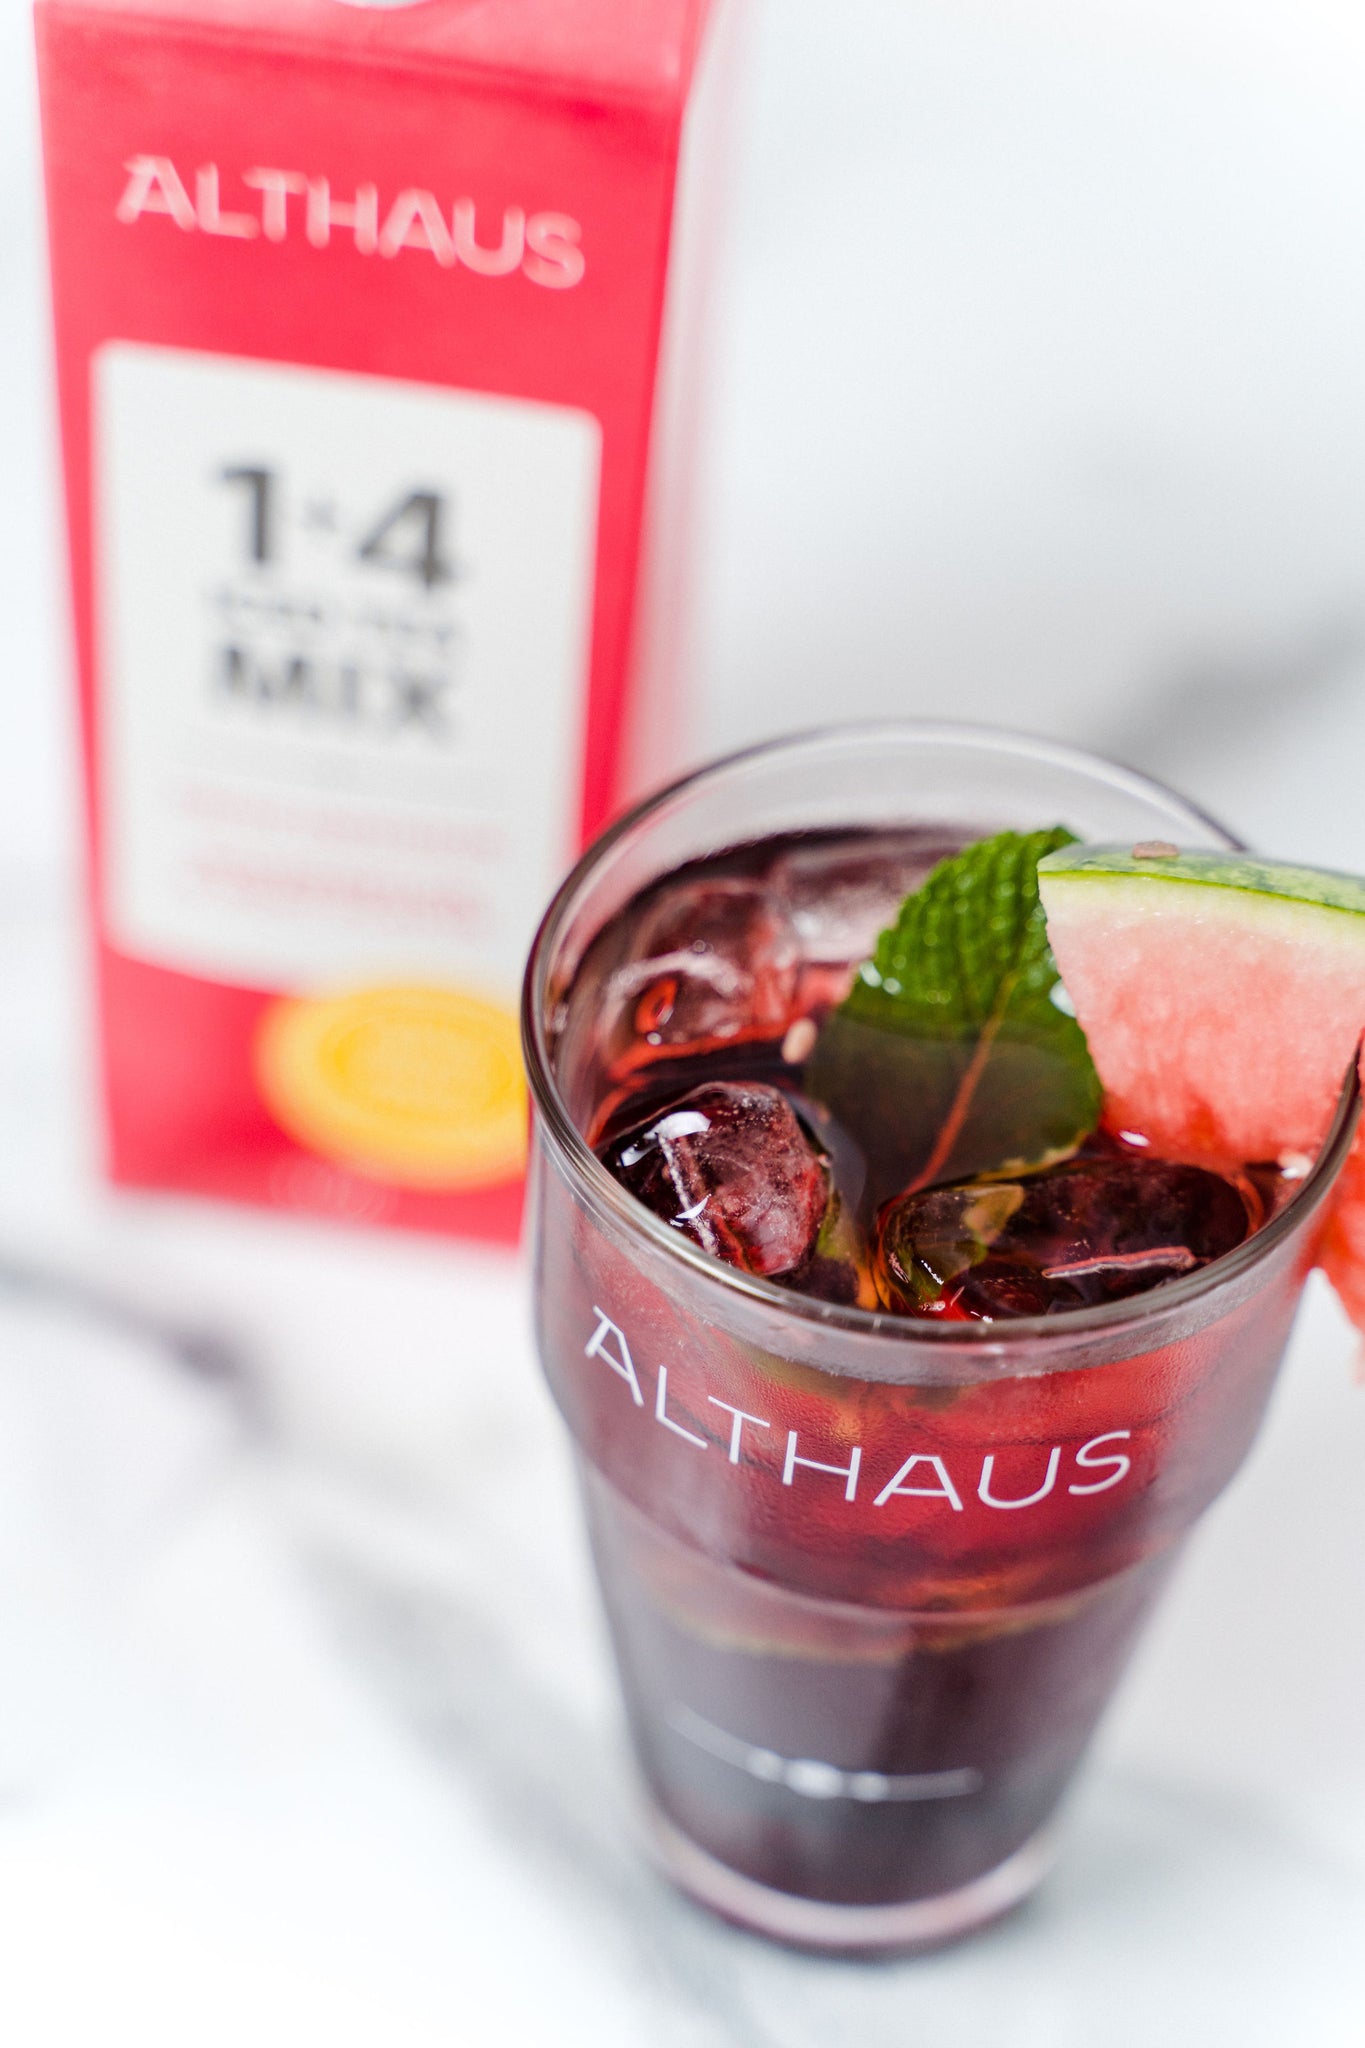 Althaus 1+4 Iced Tea Mix - Watermelon and Mint (1L) - Pago Premium Fruit Juice Store